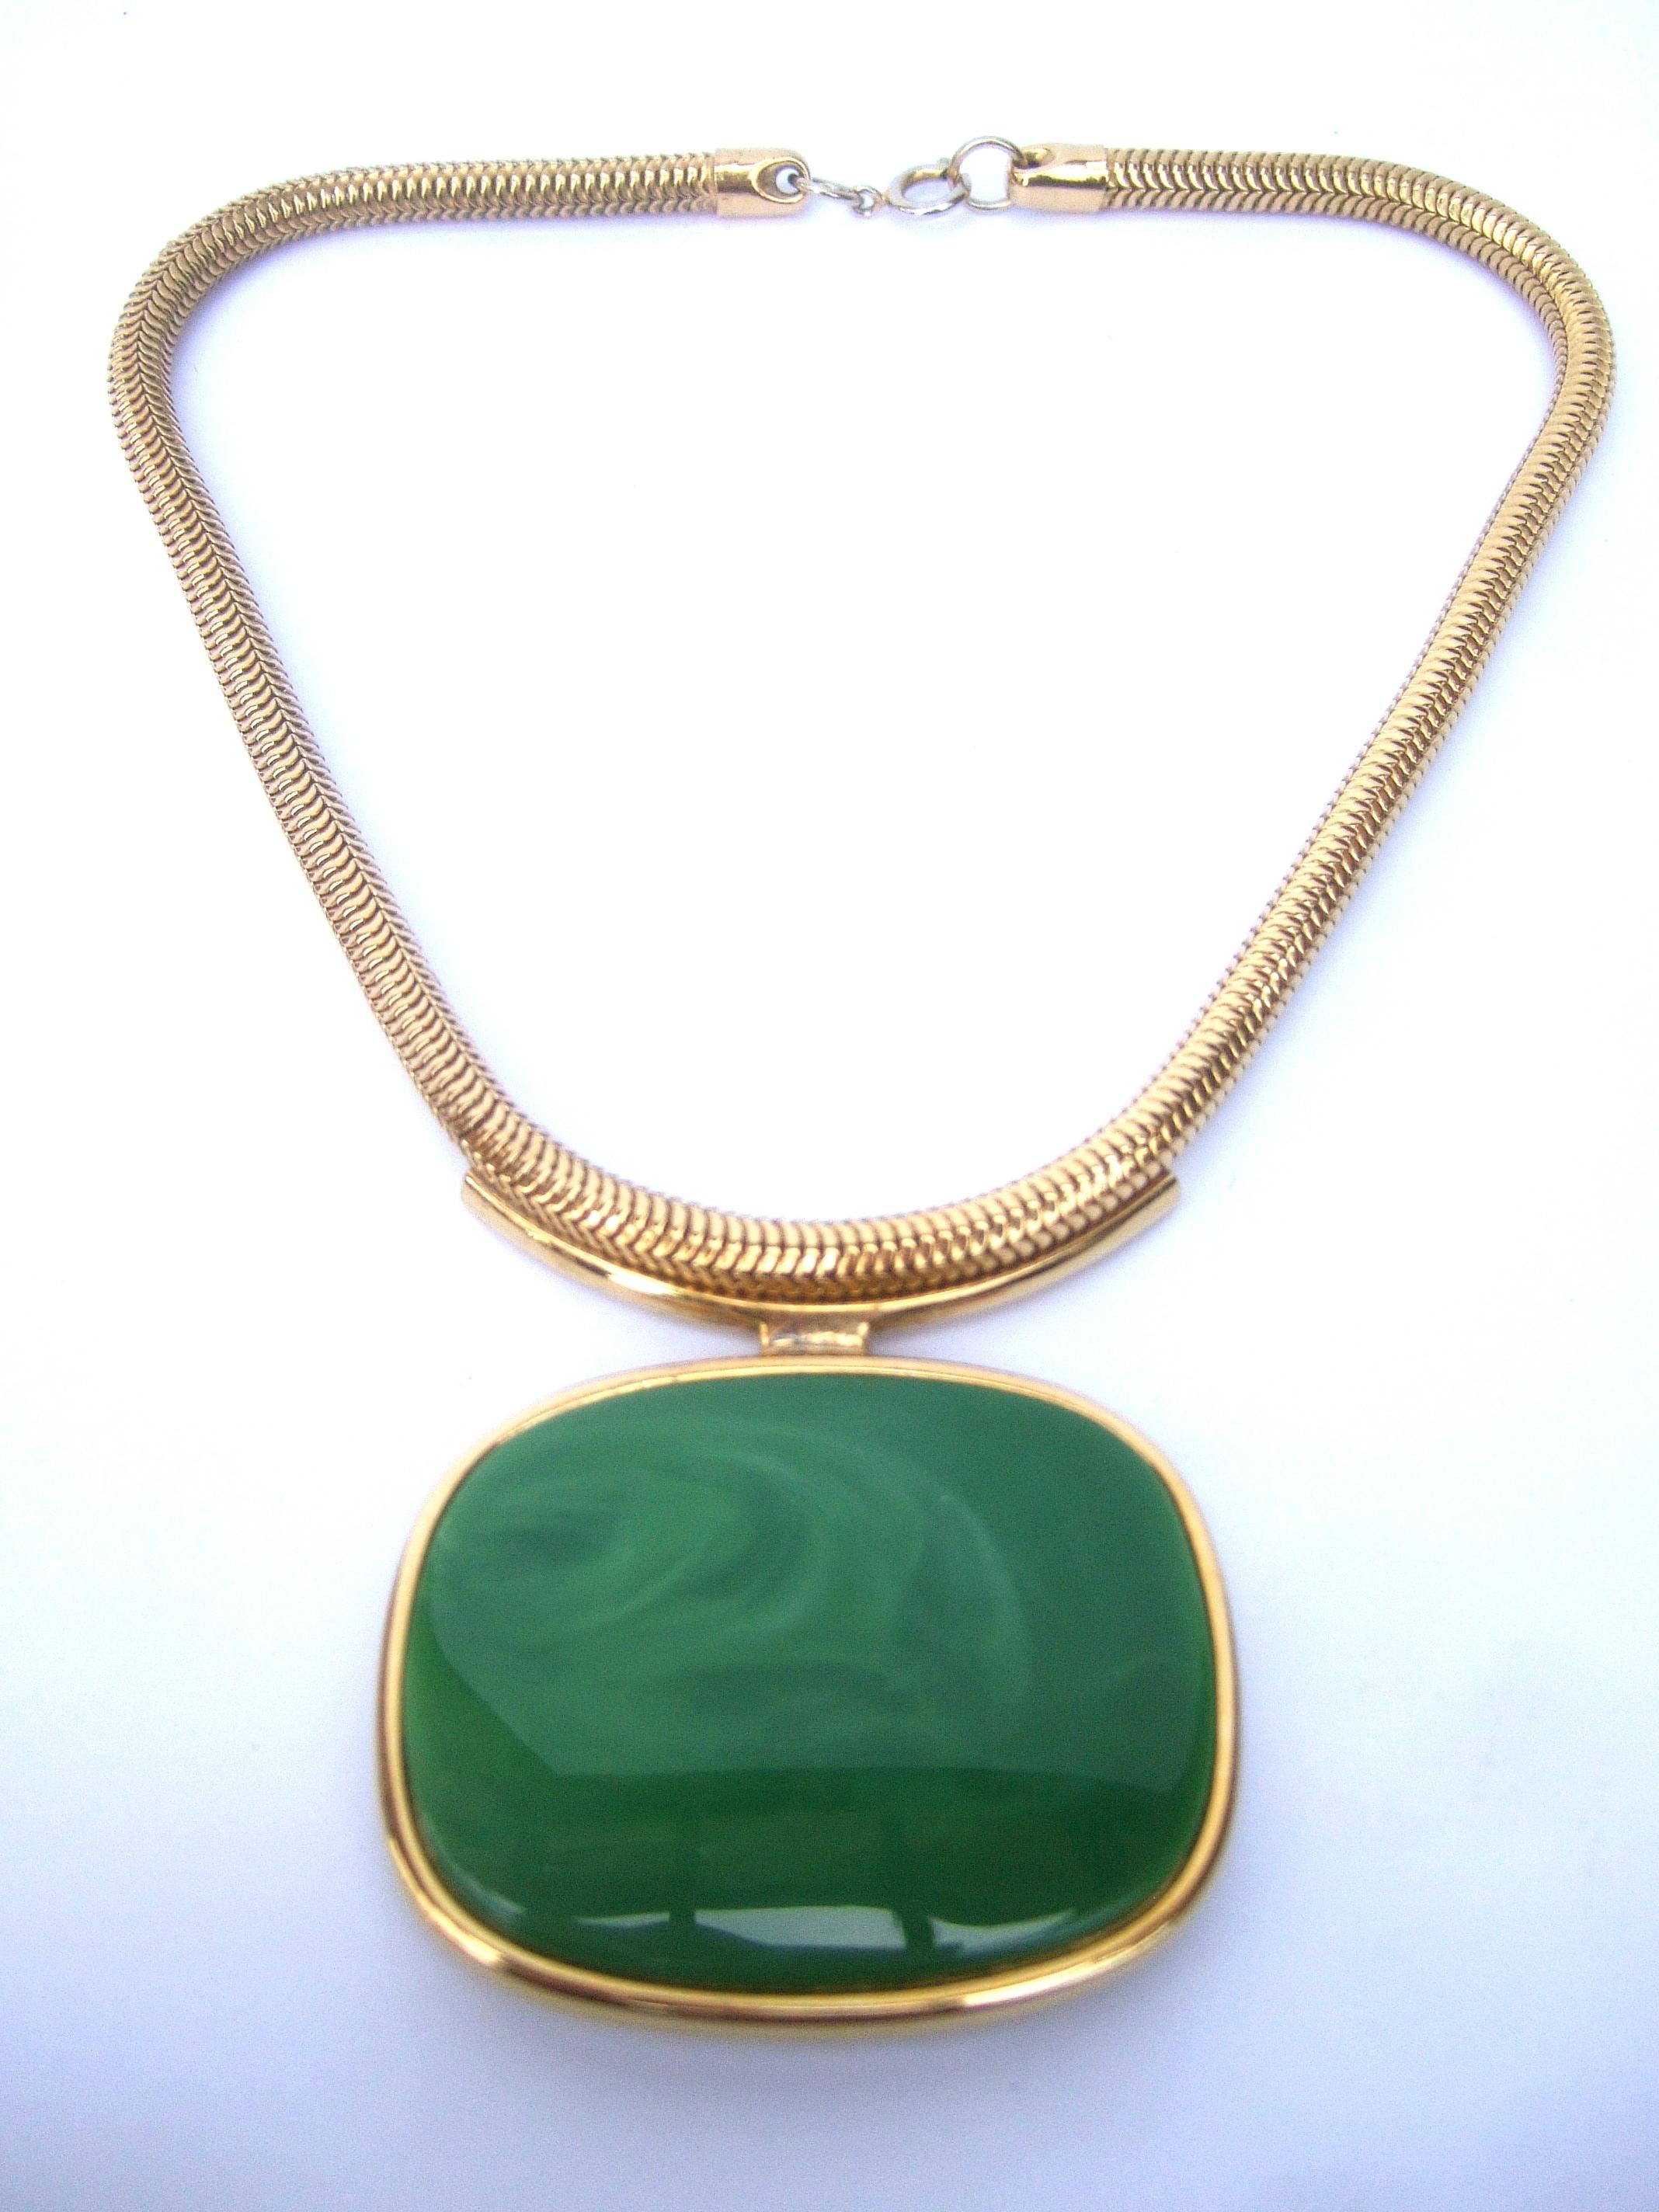 Lanvin Paris Sleek Resin Interchangeable Pendant Choker Necklace in Box  1970s 12